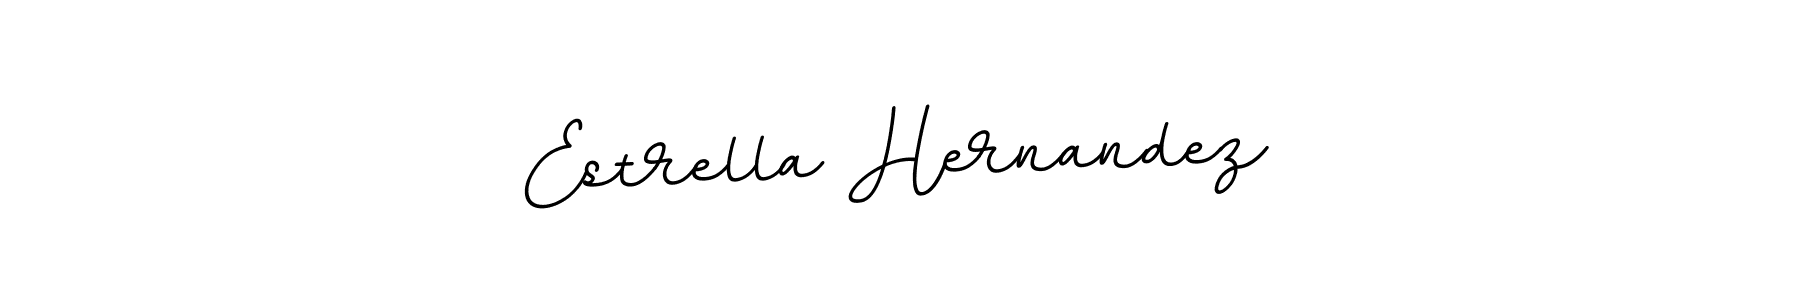 How to Draw Estrella Hernandez signature style? BallpointsItalic-DORy9 is a latest design signature styles for name Estrella Hernandez. Estrella Hernandez signature style 11 images and pictures png